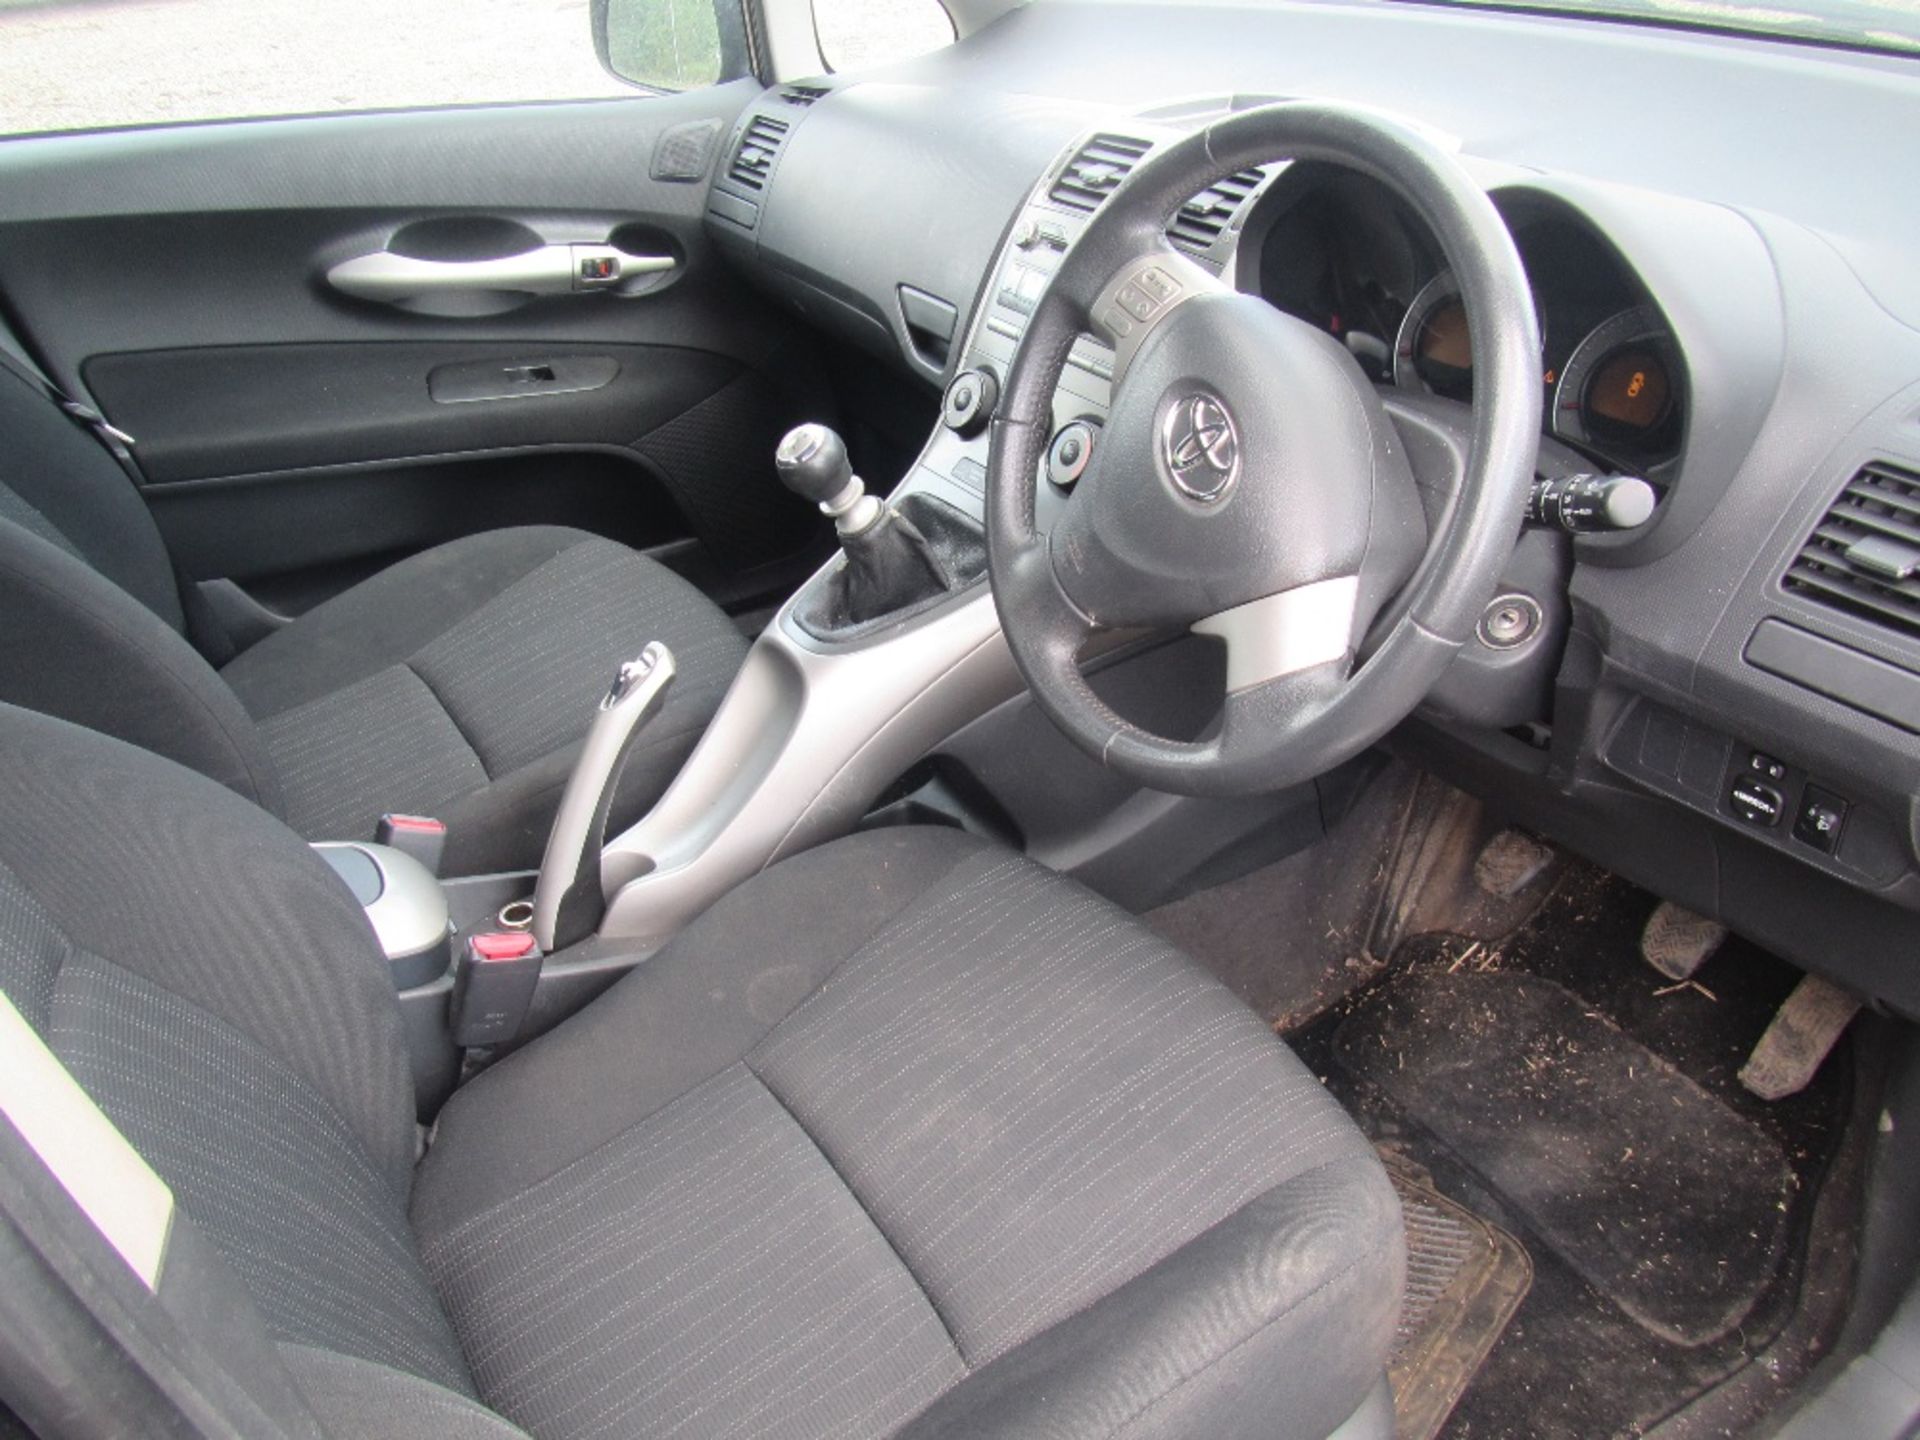 Toyota Aures 5 Door Hatchback. Reg. Docs. will be supplied. Mileage: 167,928. MOT till 27/6/17. Reg. - Image 8 of 8